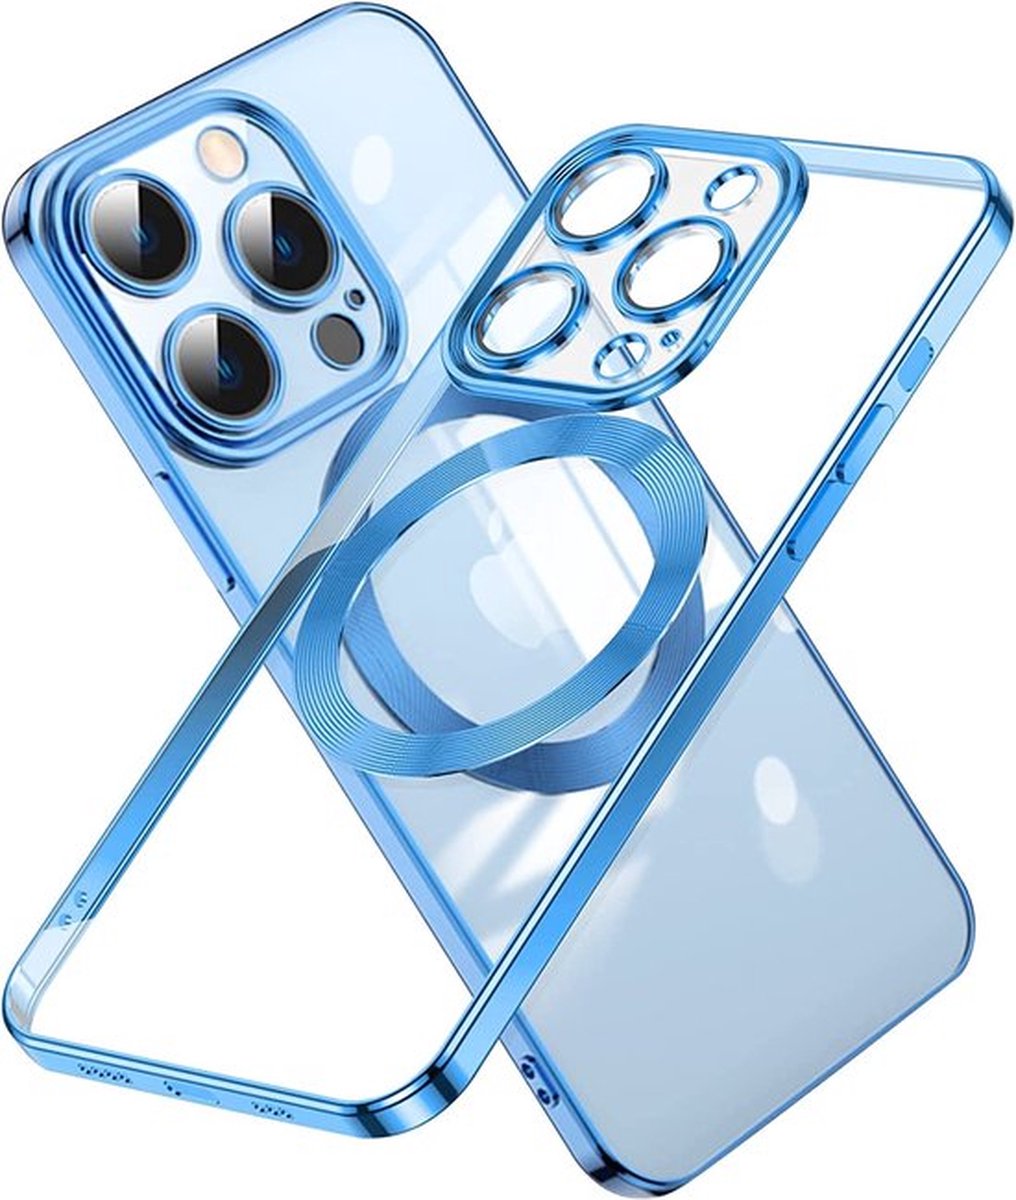 iPhone 14 Pro Max hoesje Magnetisch Met Lens beschermer – Transparant / Blauw - Magneet hoesje MagSafe Compatible Case cover iPhone 14 Pro Max.